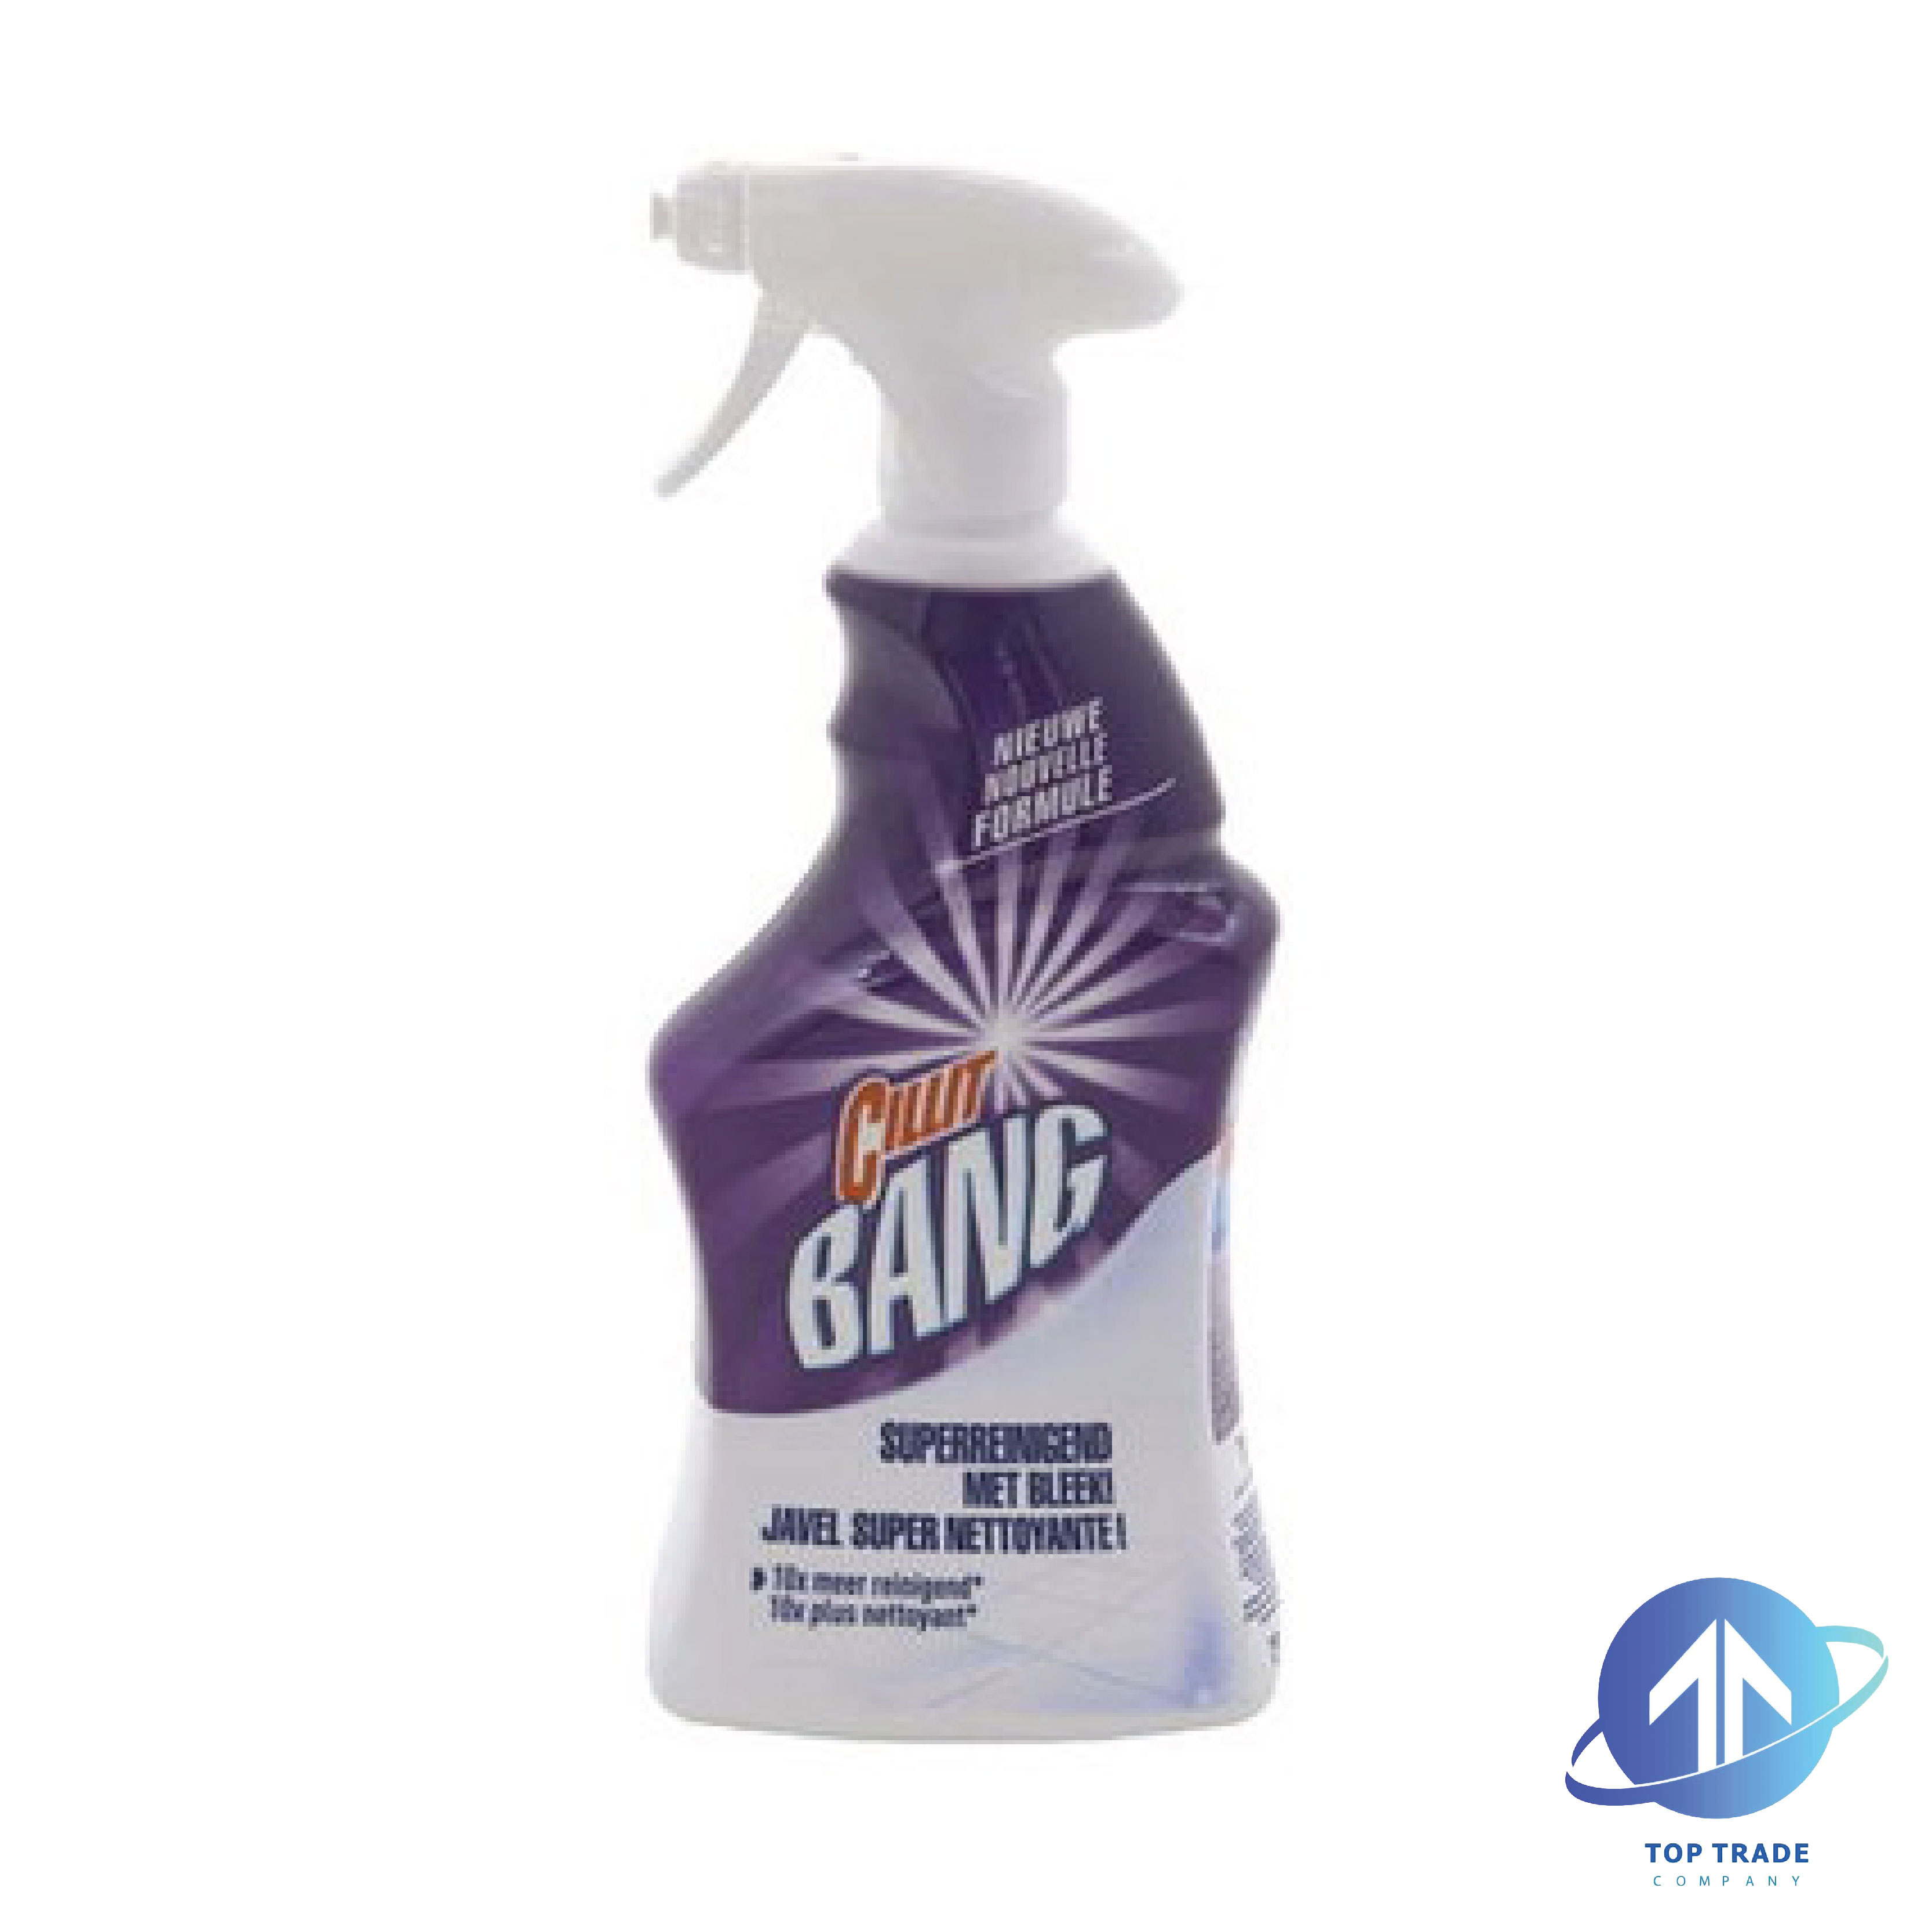 Cillit Bang spray Bleach & Hygiene 750ml